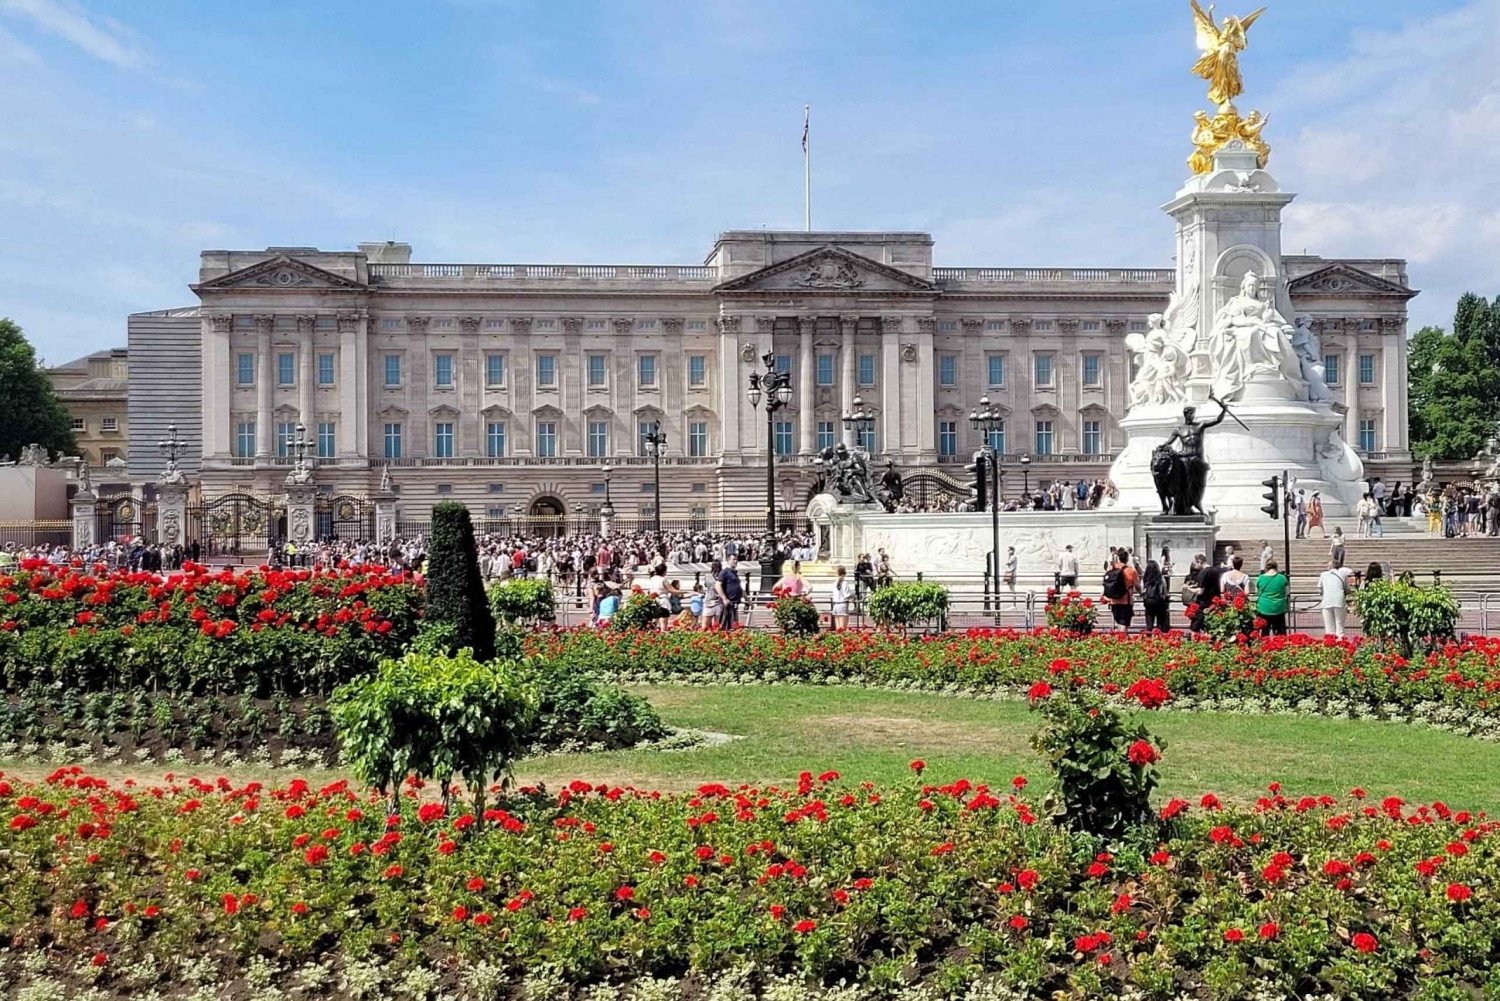 Londres : Royal Tour & Buckingham Palace ou Royal Mews en option